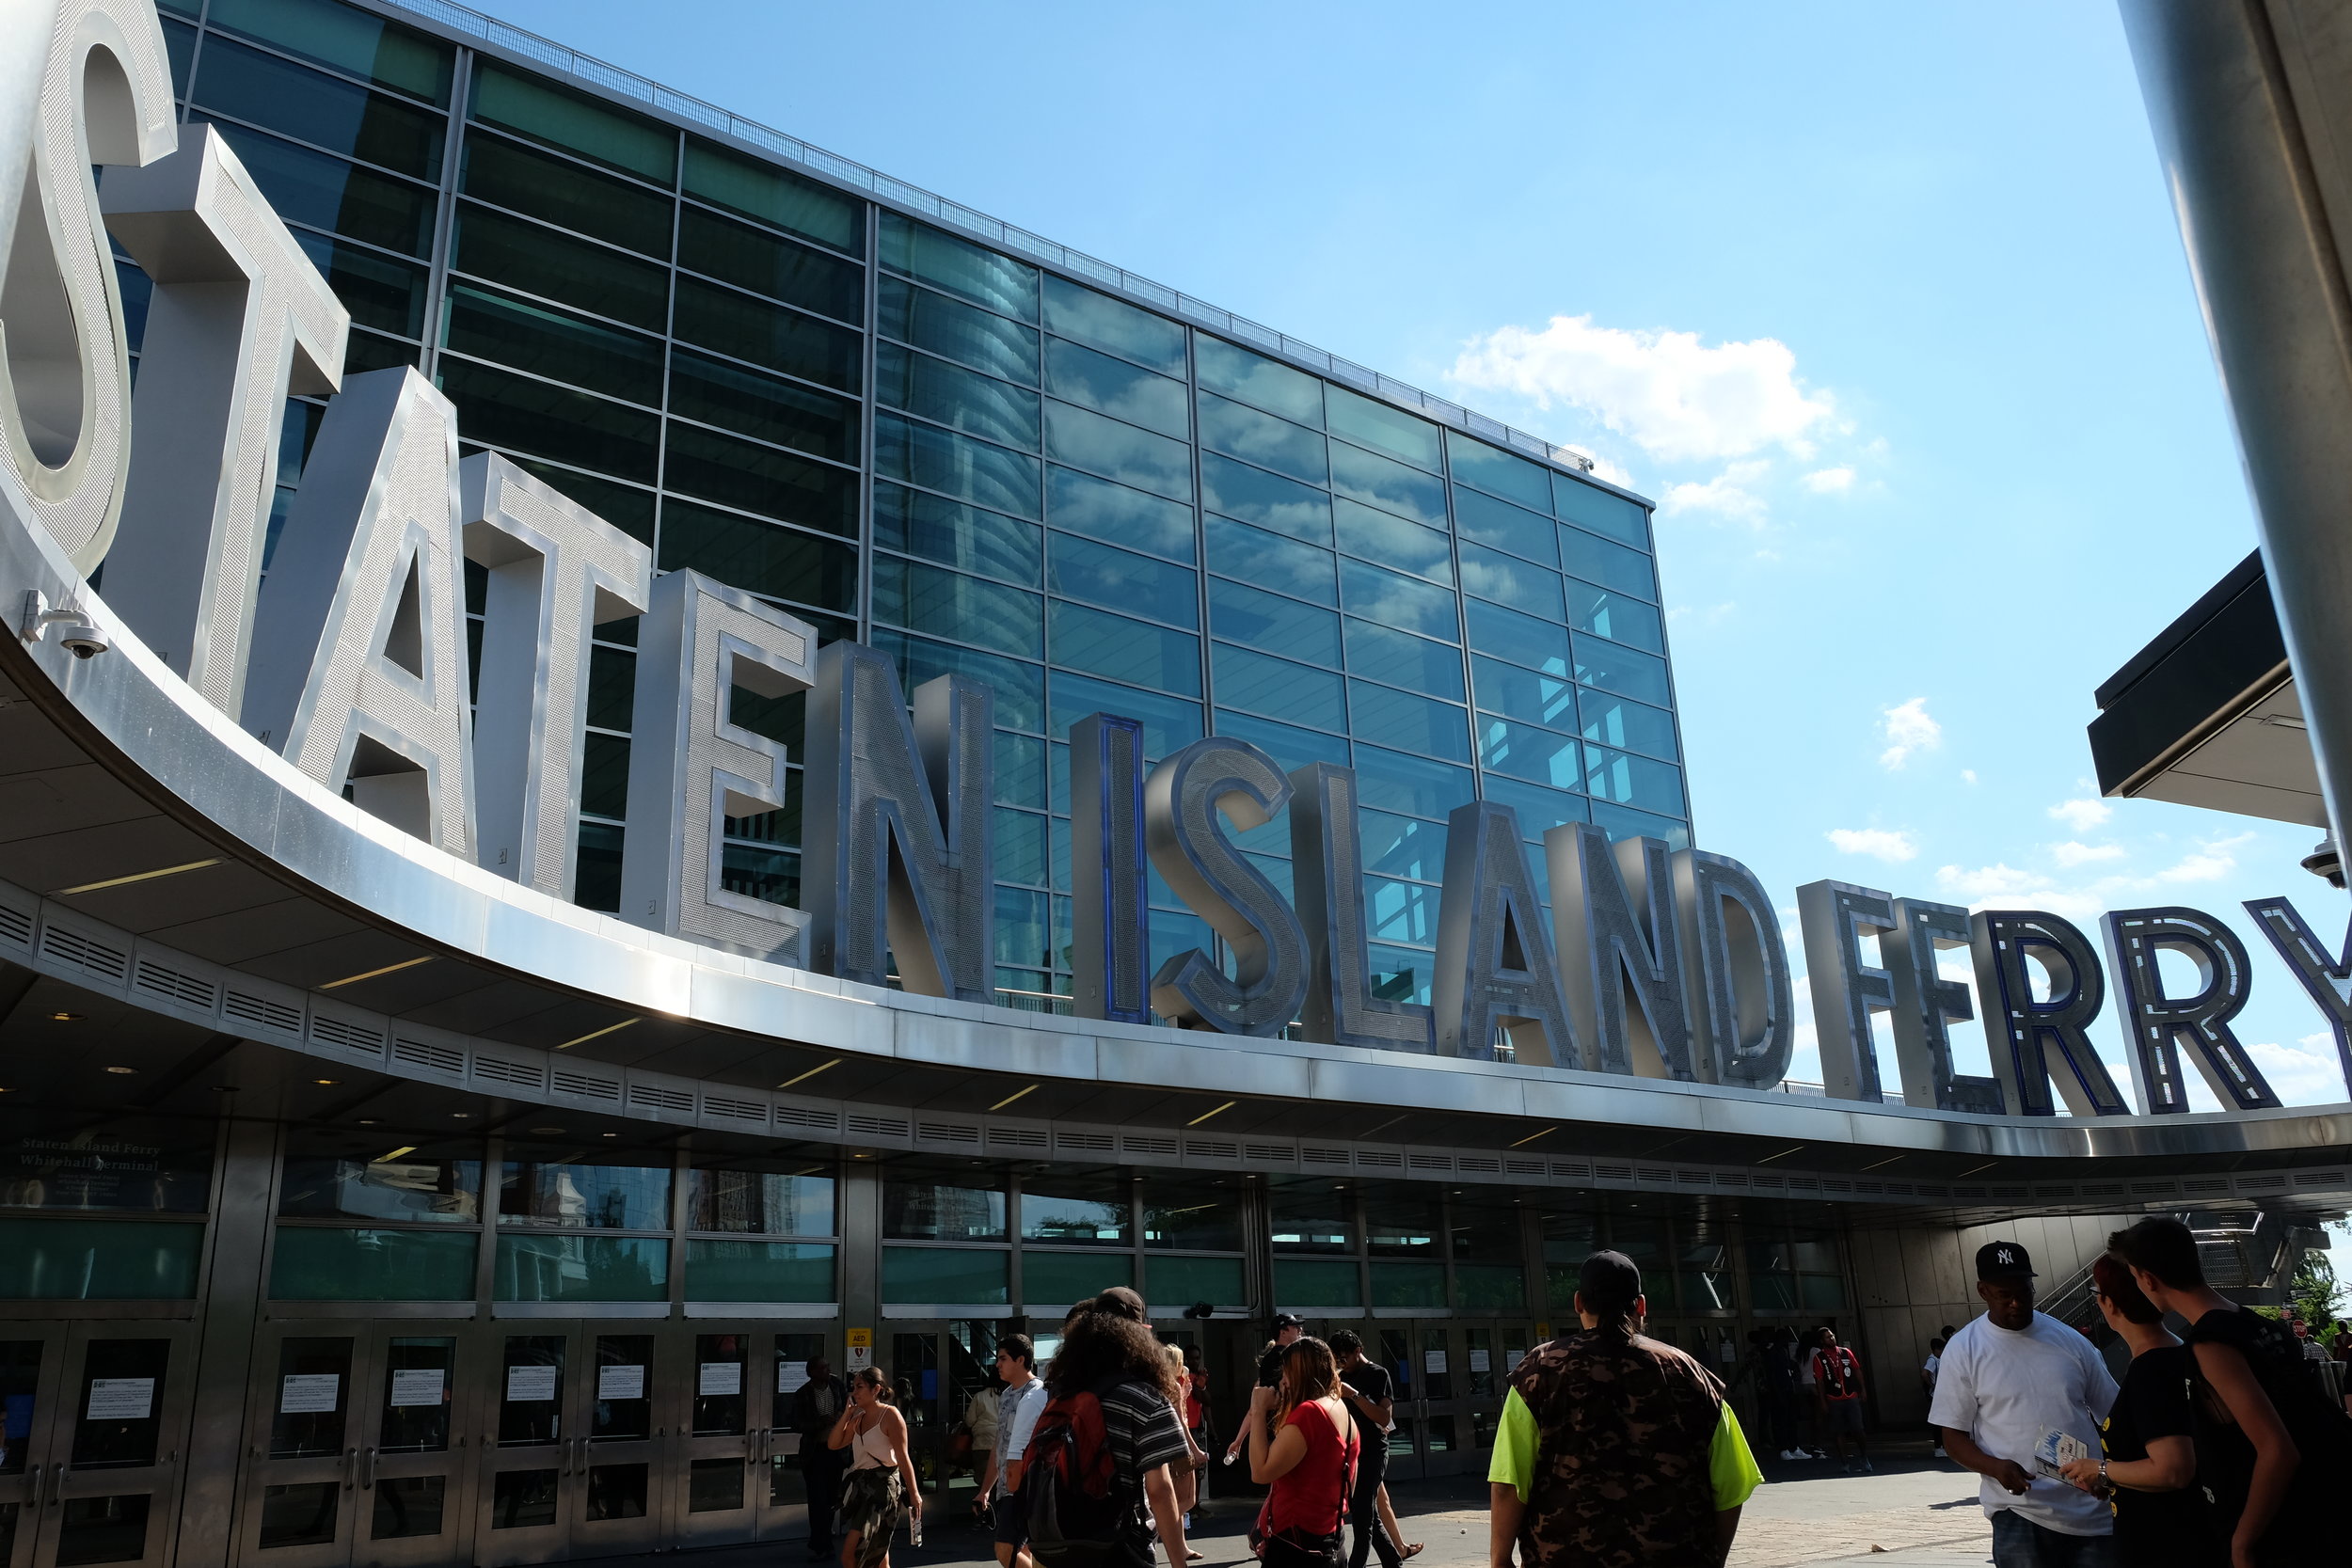 Staten Island Ferry Terminal